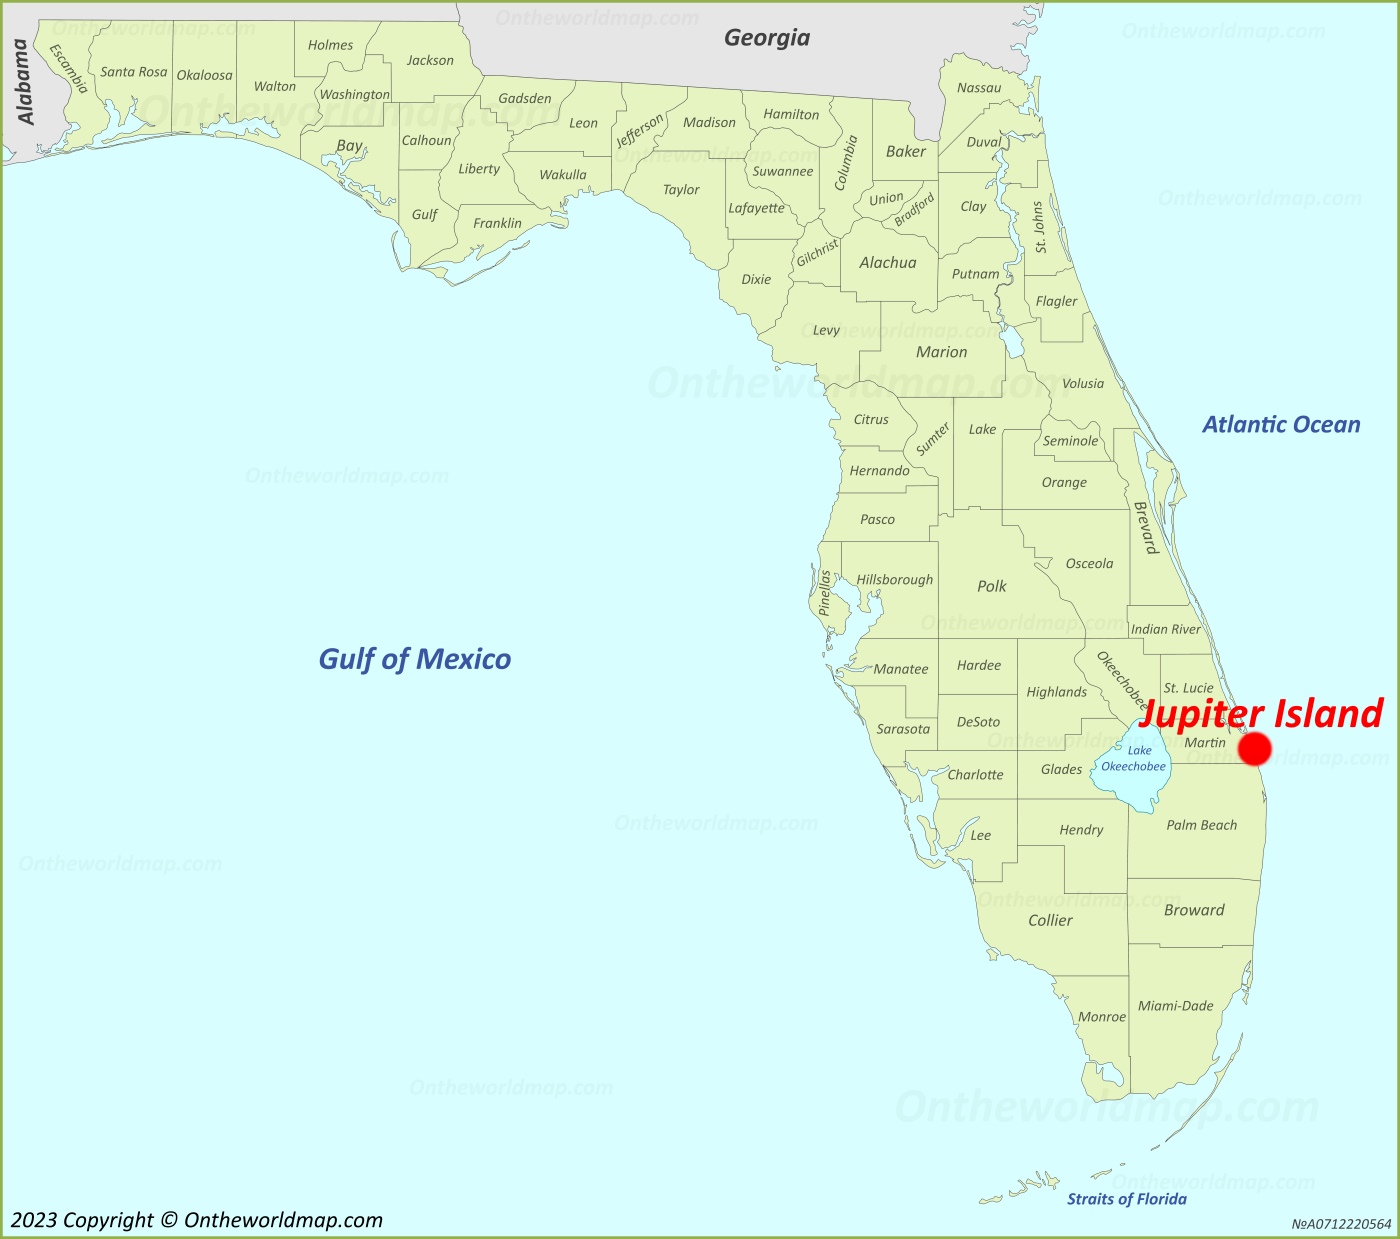 Jupiter Island Location On The Florida Map